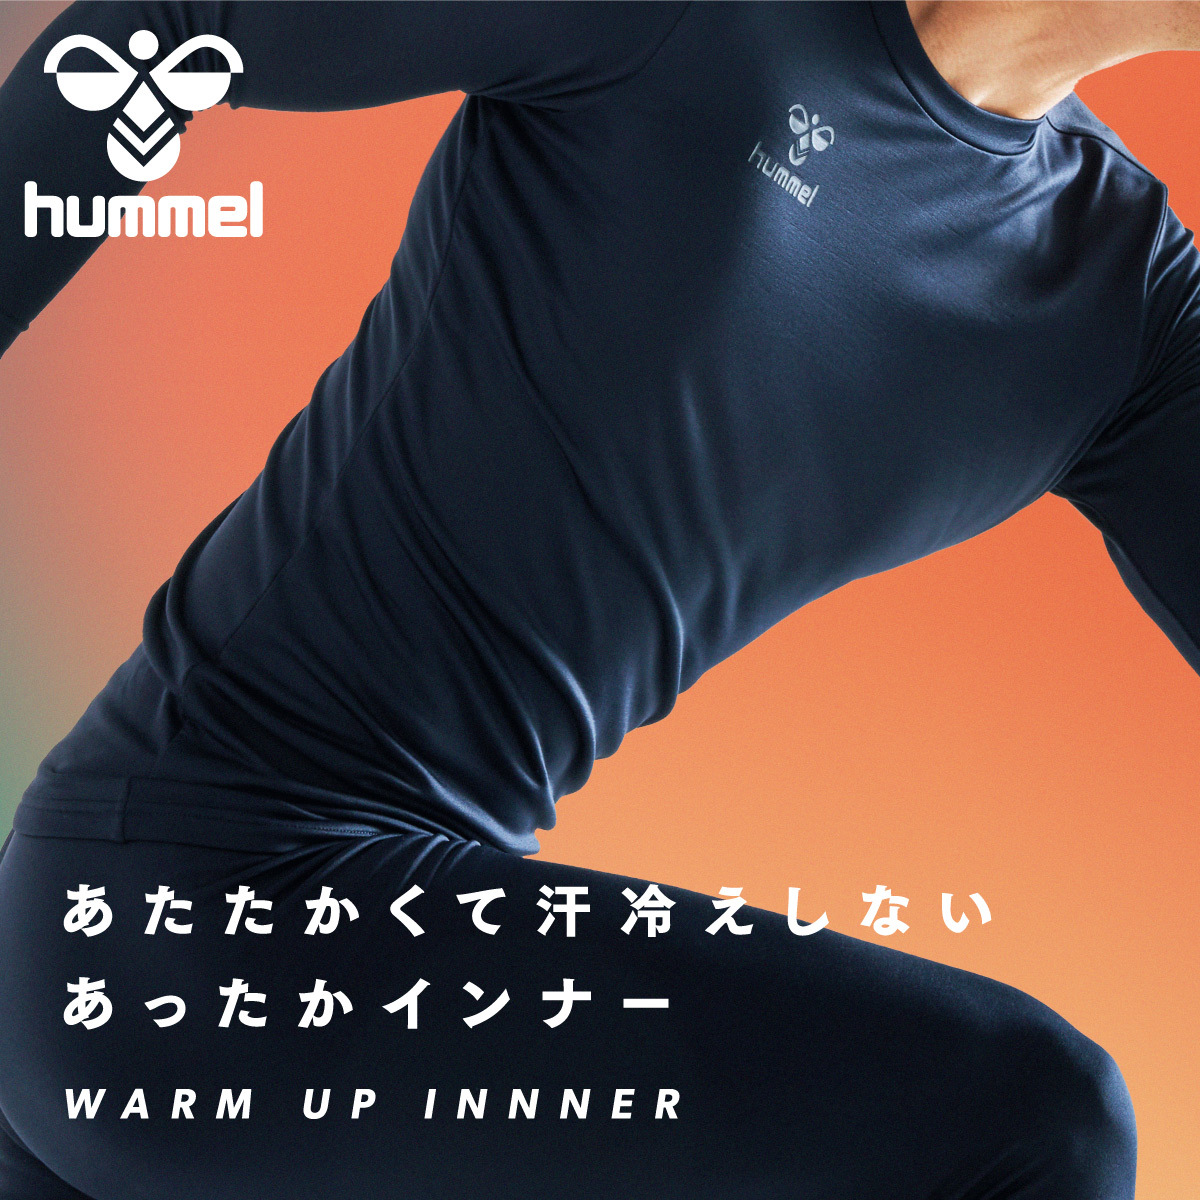 hummel(ヒュンメル)-S ジュニア丸首あったかインナーシャツ グリーン